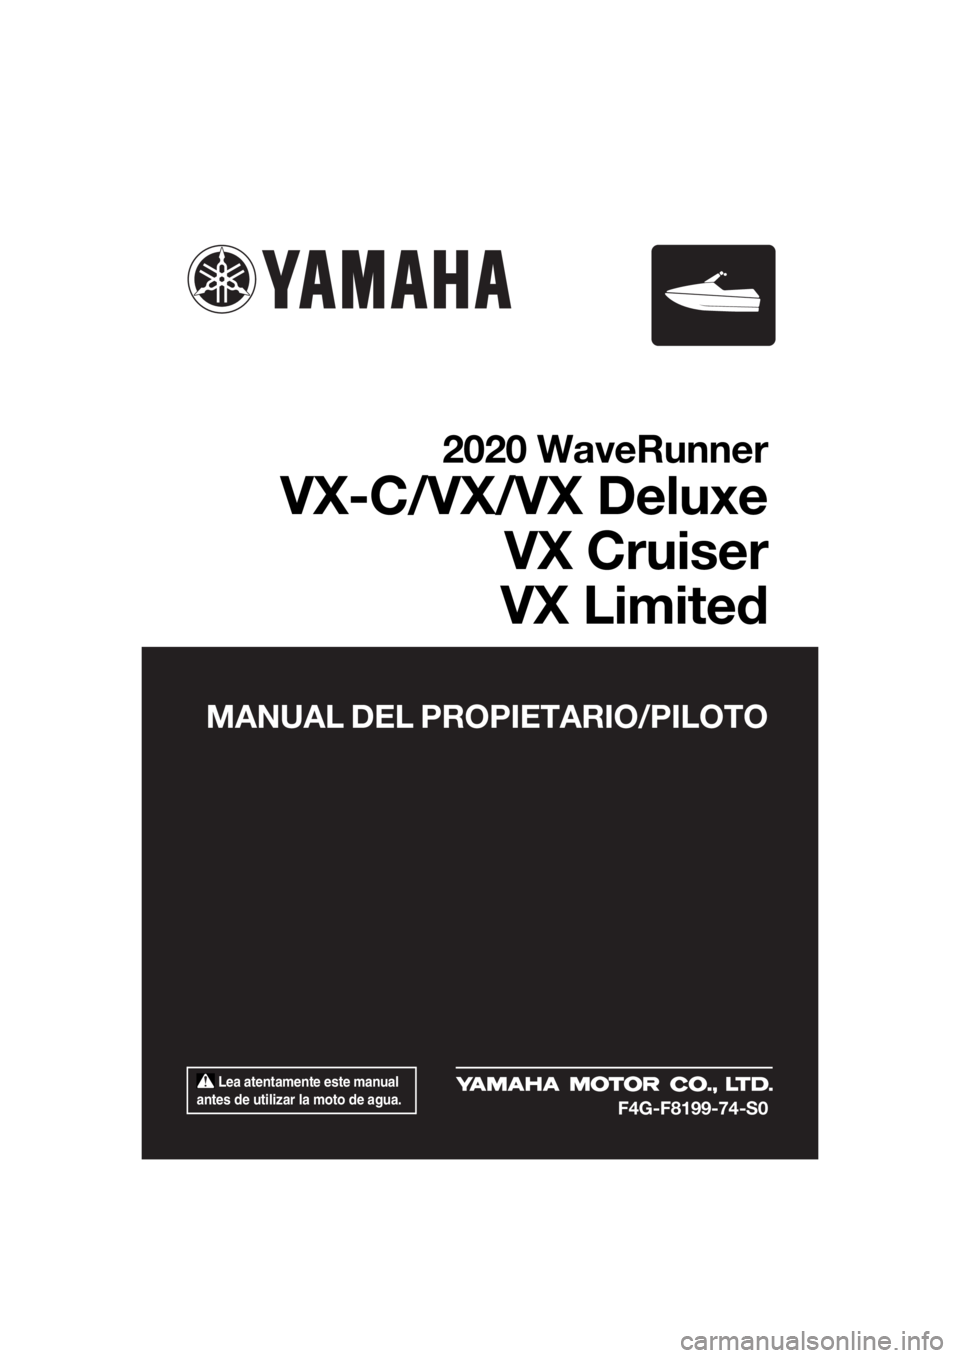 YAMAHA VX LIMITED 2020  Manuale de Empleo (in Spanish)  Lea atentamente este manual 
antes de utilizar la moto de agua.
MANUAL DEL PROPIETARIO/PILOTO
2020 WaveRunner
VX-C/VX/VX Deluxe
VX Cruiser
VX Limited
F4G-F8199-74-S0
UF4G74S0.book  Page 1  Monday, Ju